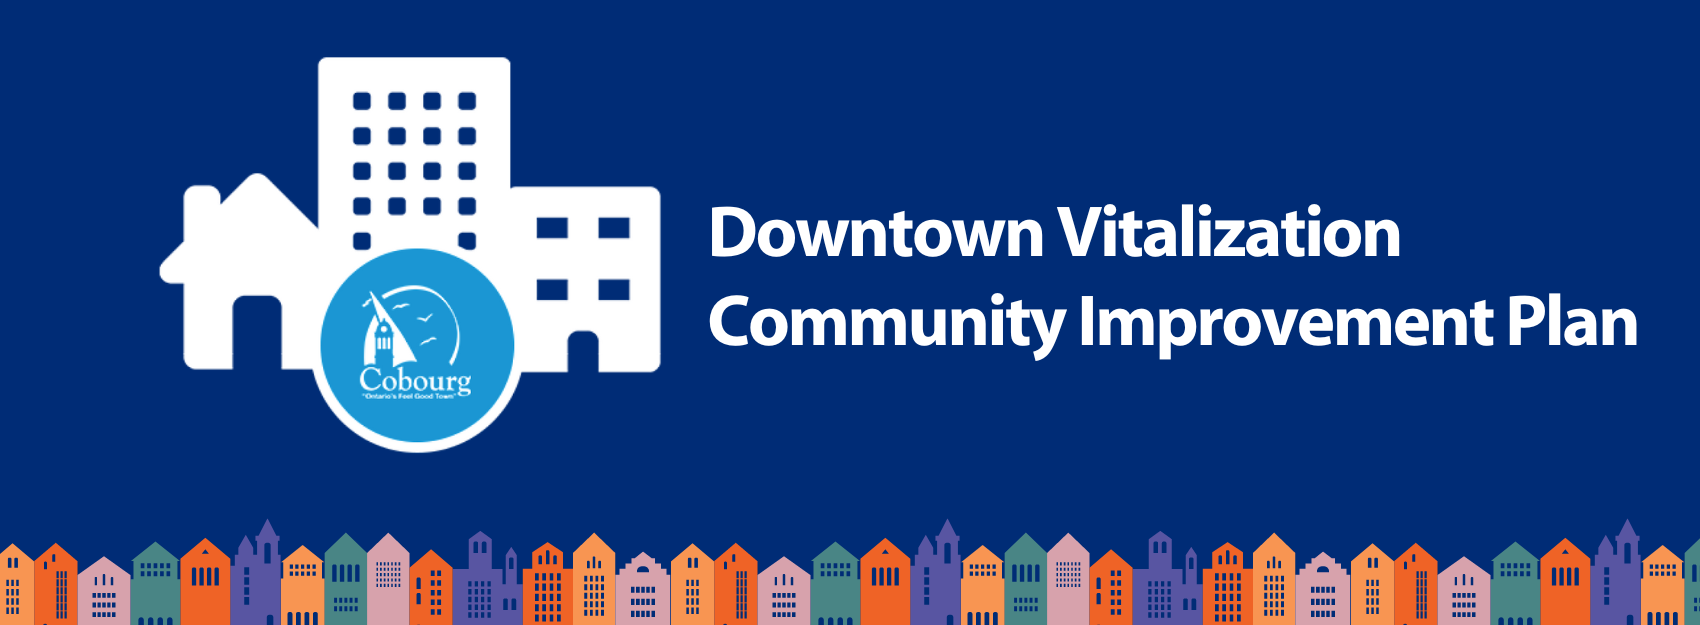 Downtown Vitalization Community Improvement Plan